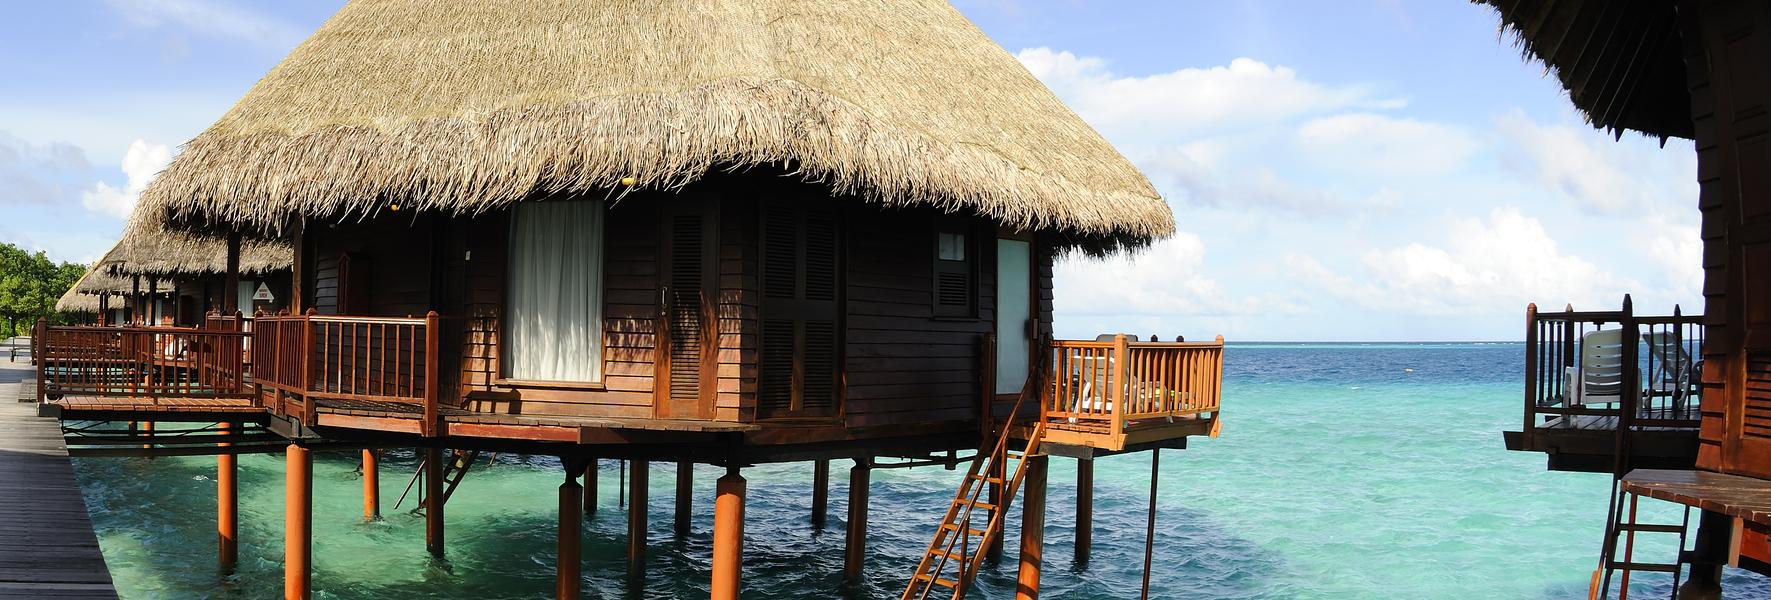 The Bahamas Vacation Rentals - Wimdu